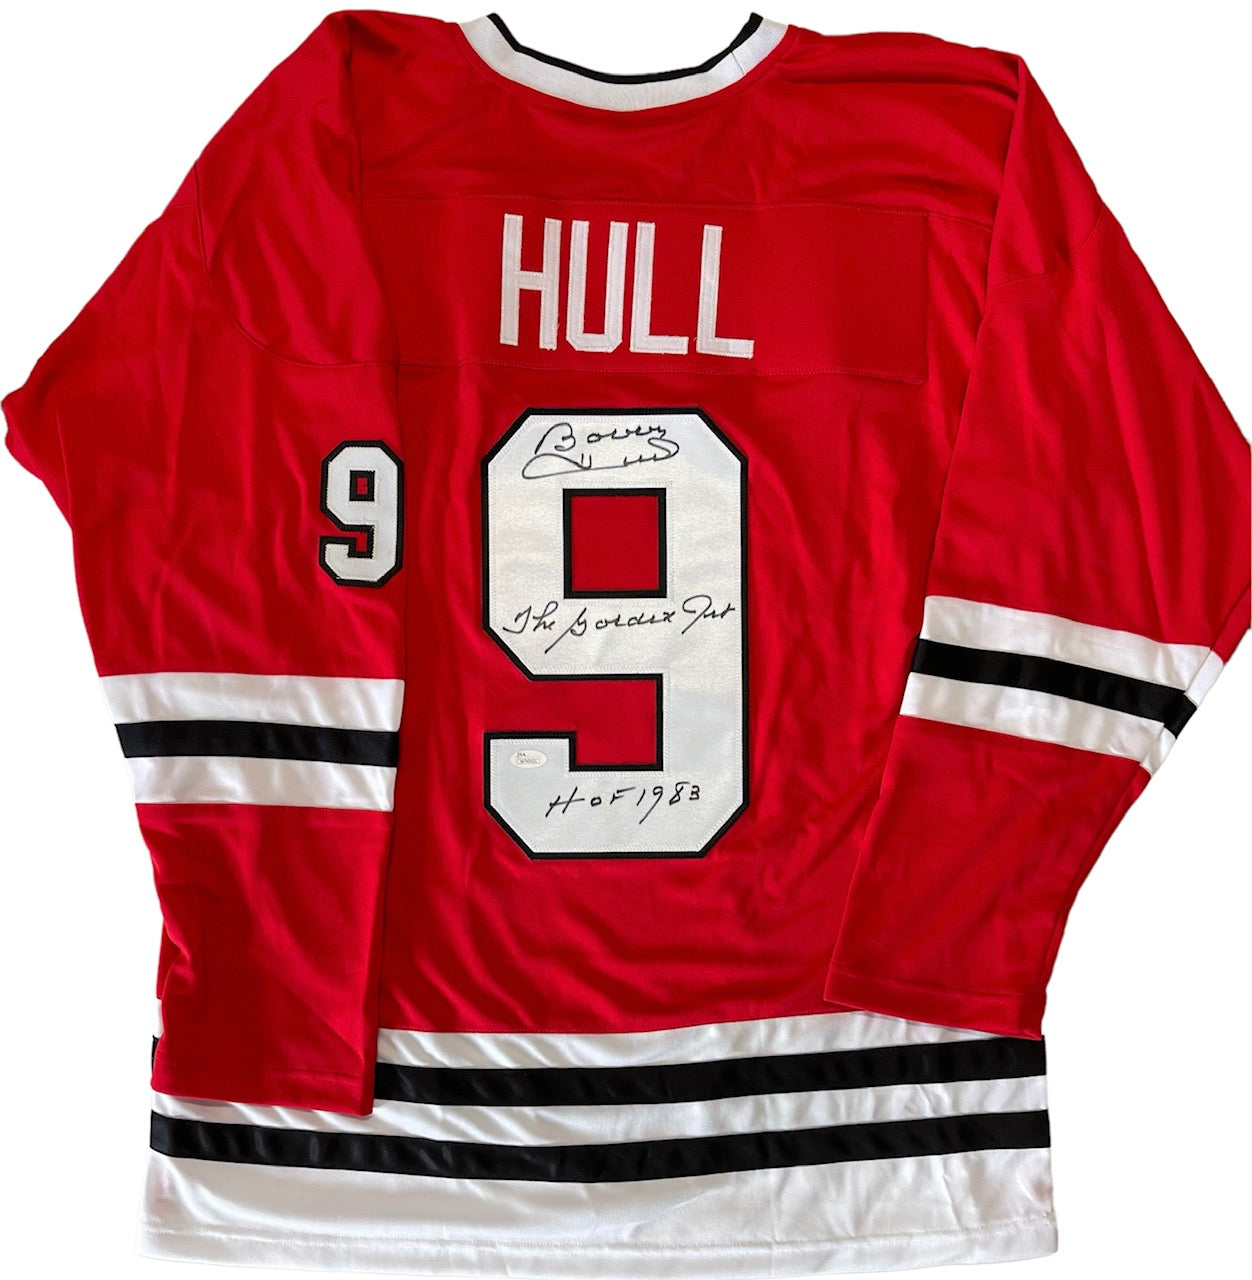 Bobby Hull Signed Chicago Blackhawks Red Jersey Inscribed "HOF  1983" (JSA COA)